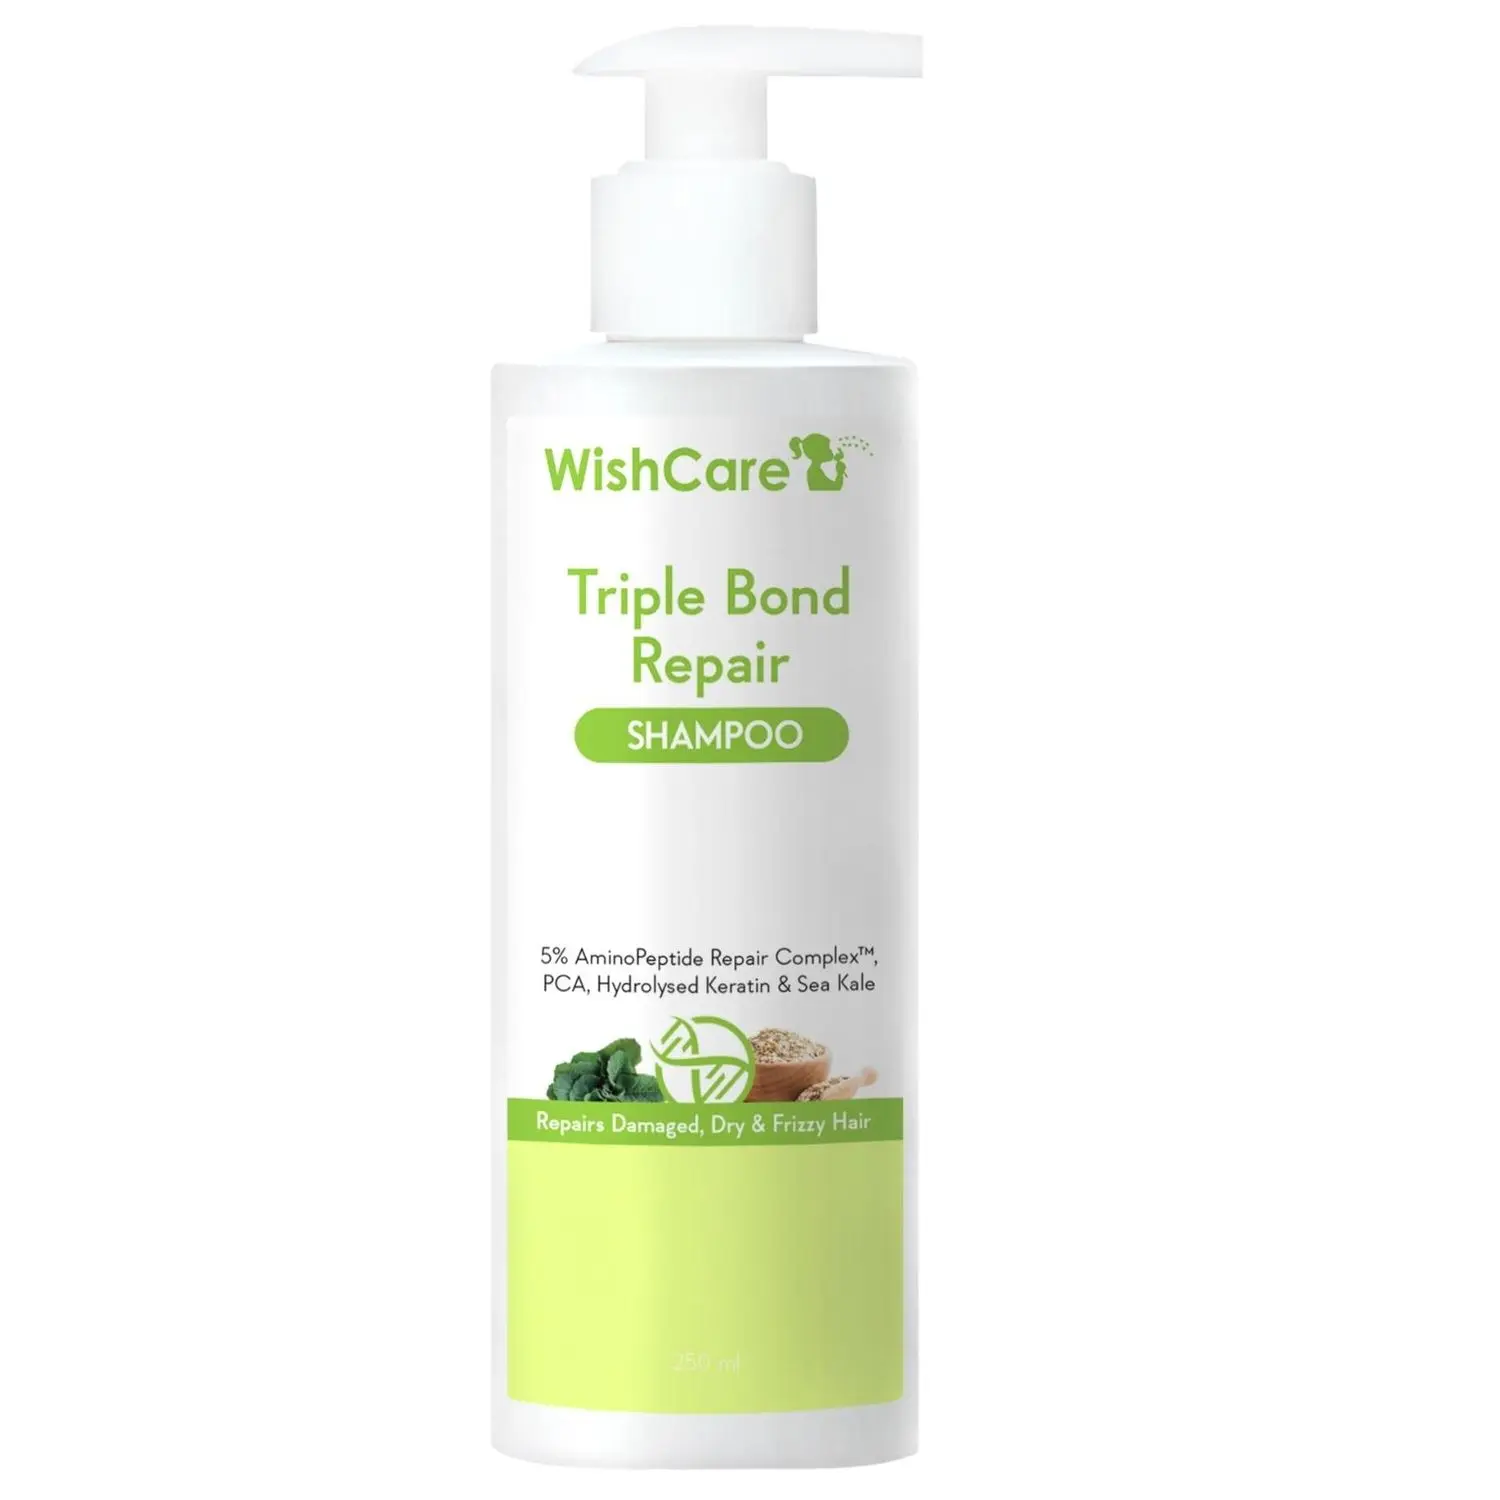 WishCare Triple Bond Repair Shampoo - 5% AminoPeptide Complex & PCA - Repairs Damaged Dry & Frizzy Hair 250 ml